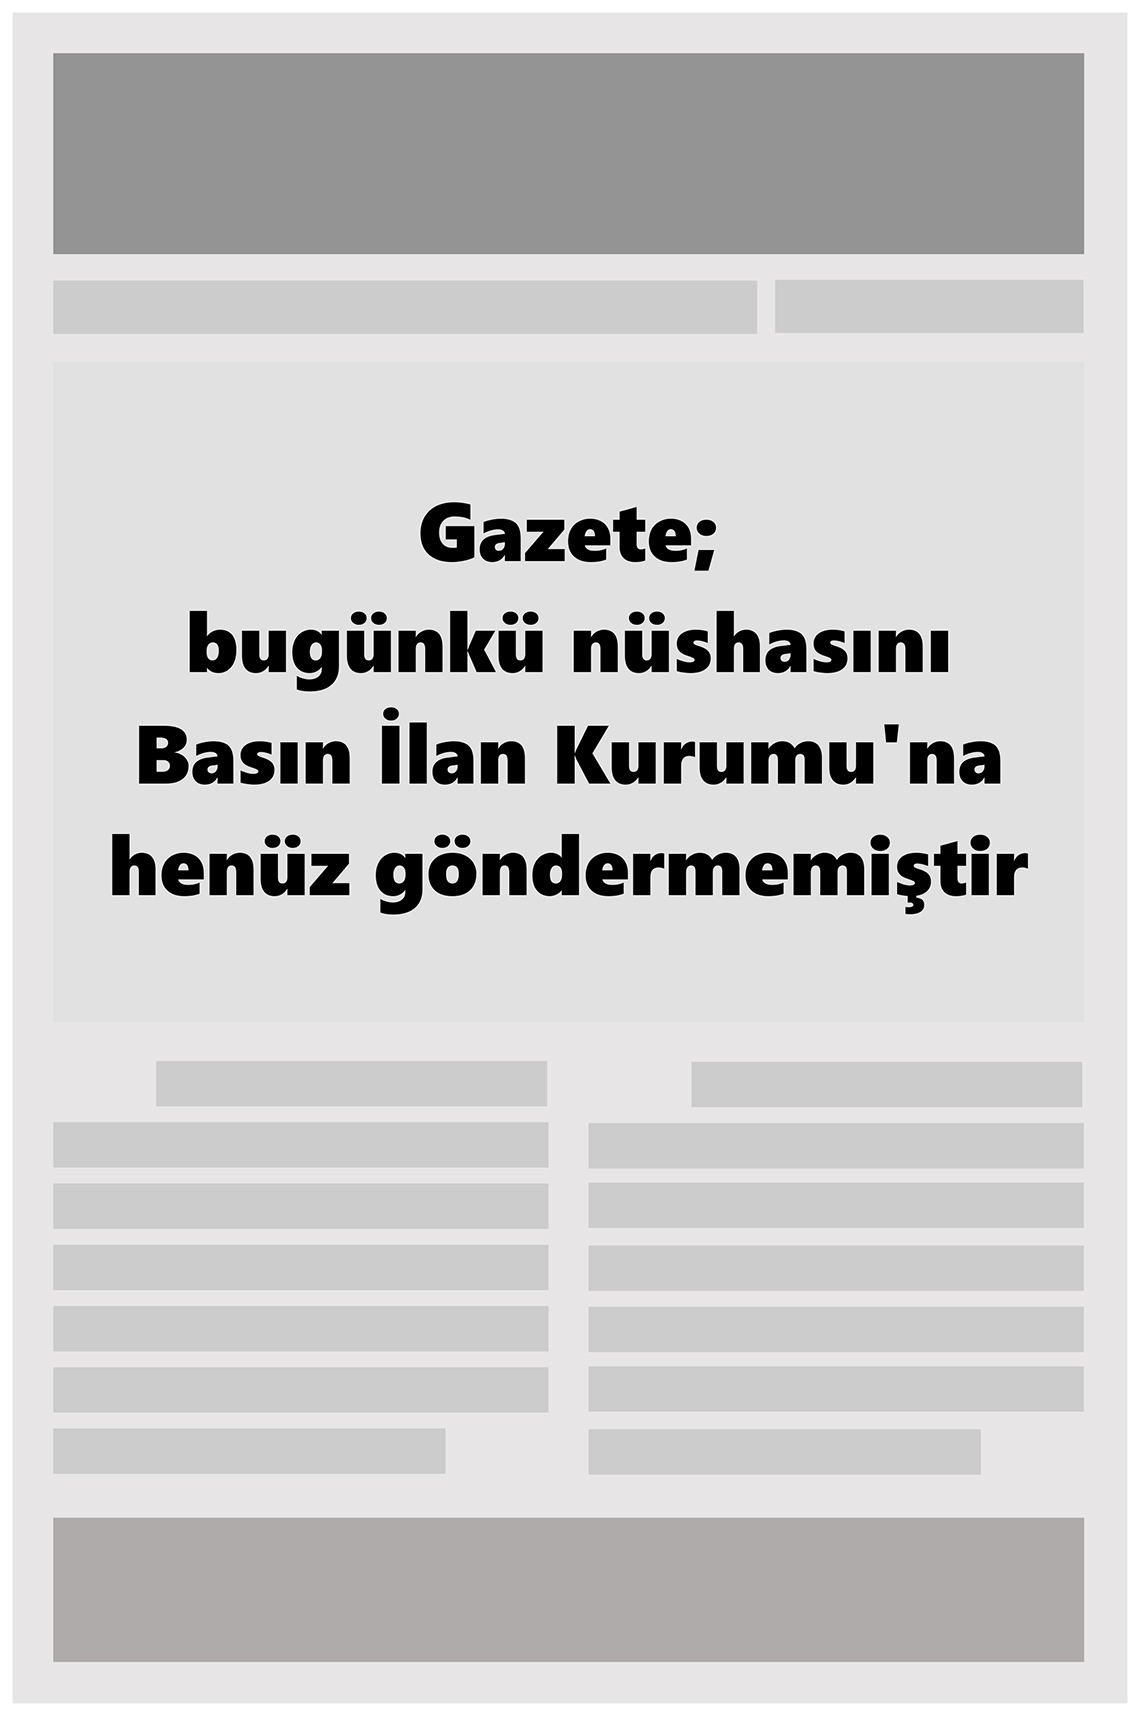 20 Ağustos 2022 Sarıkaya Yöre Haber Gazete Manşeti